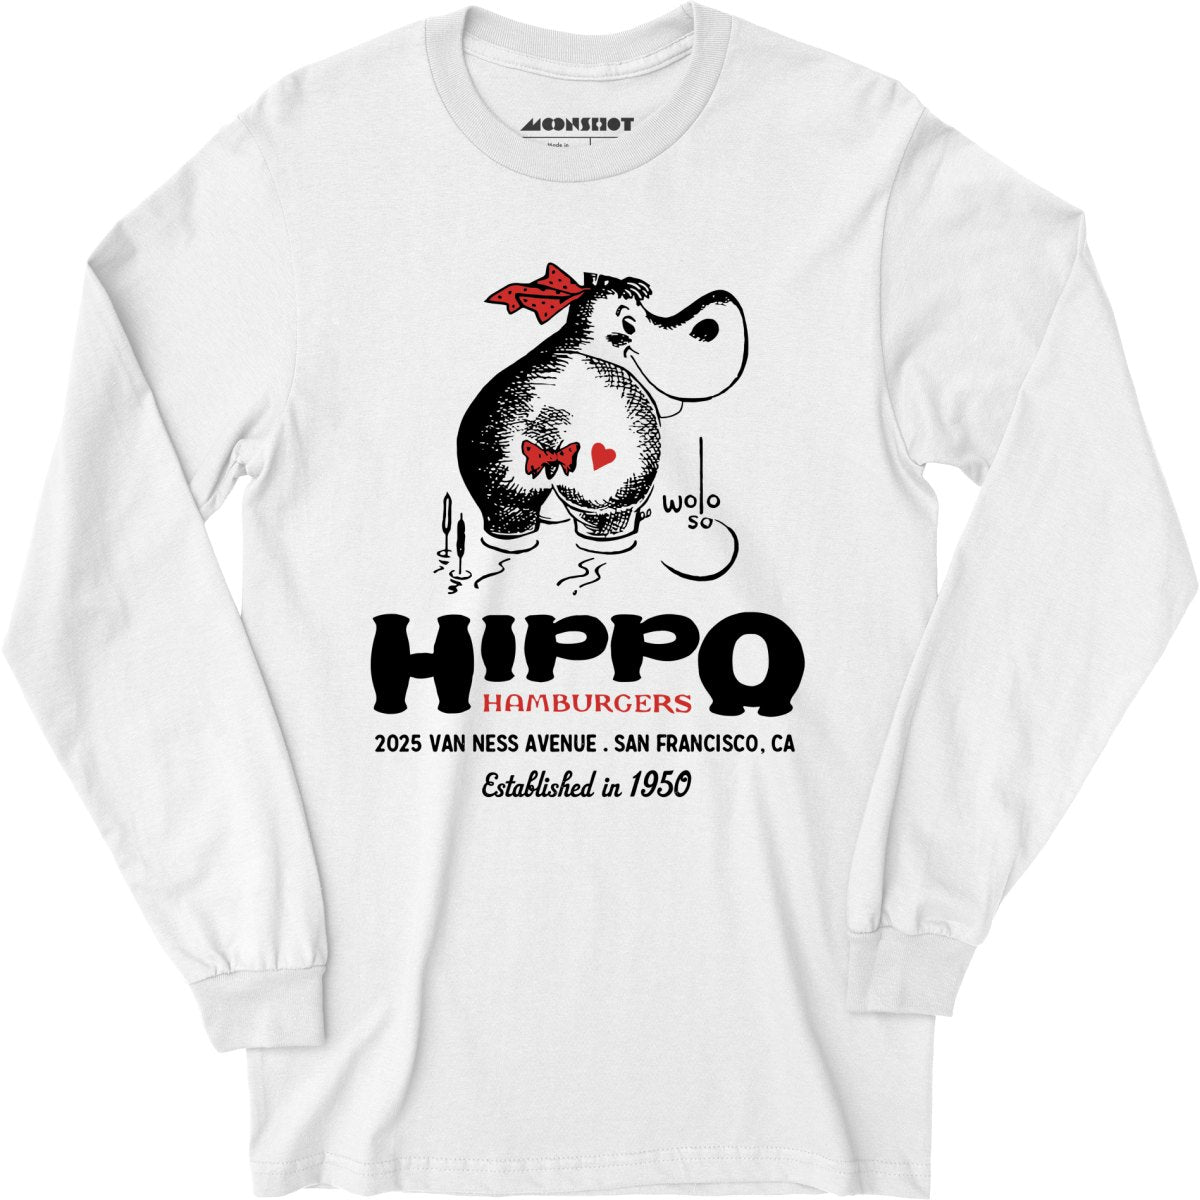 Hippo Hamburgers - San Francisco, CA - Vintage Restaurant - Long Sleeve T-Shirt